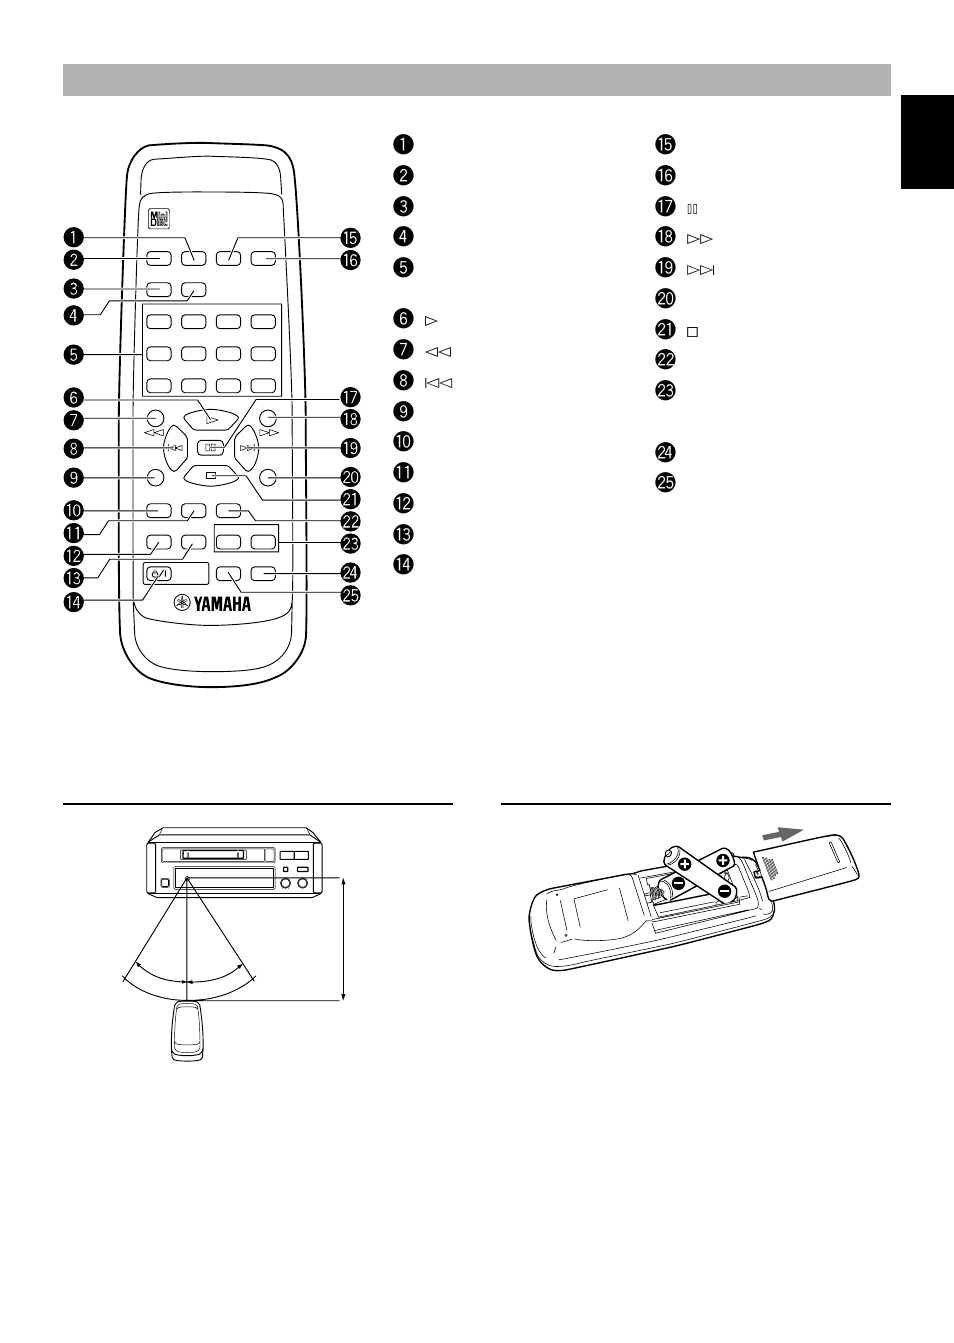 Remote control, Remote control operation range, Battery installation | Yamaha MDX-E100 User Manual | Page 5 / 24